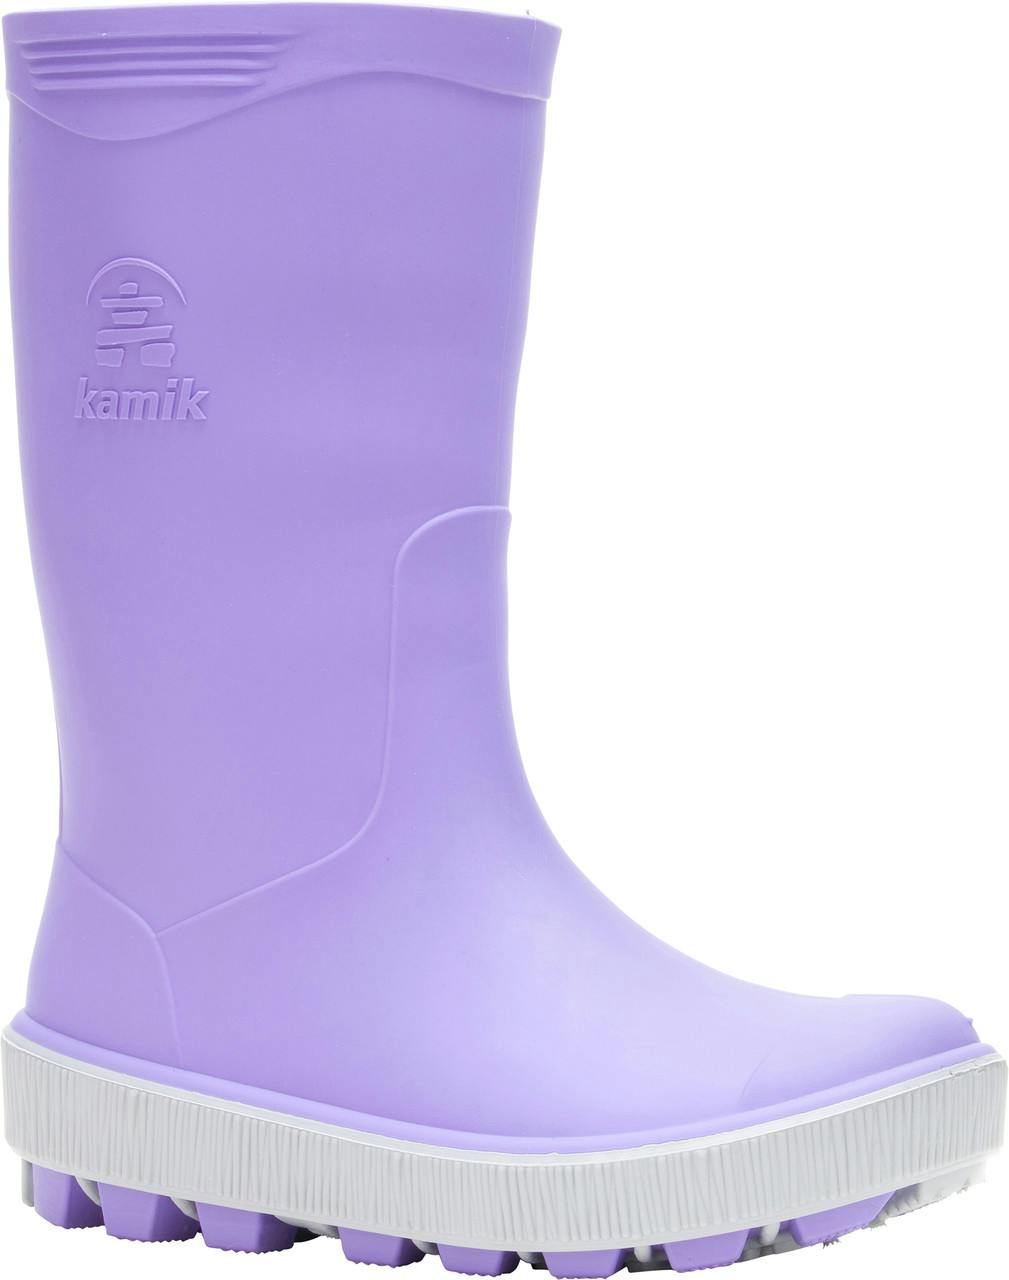 Riptide Rain Boots Lilac/Purple